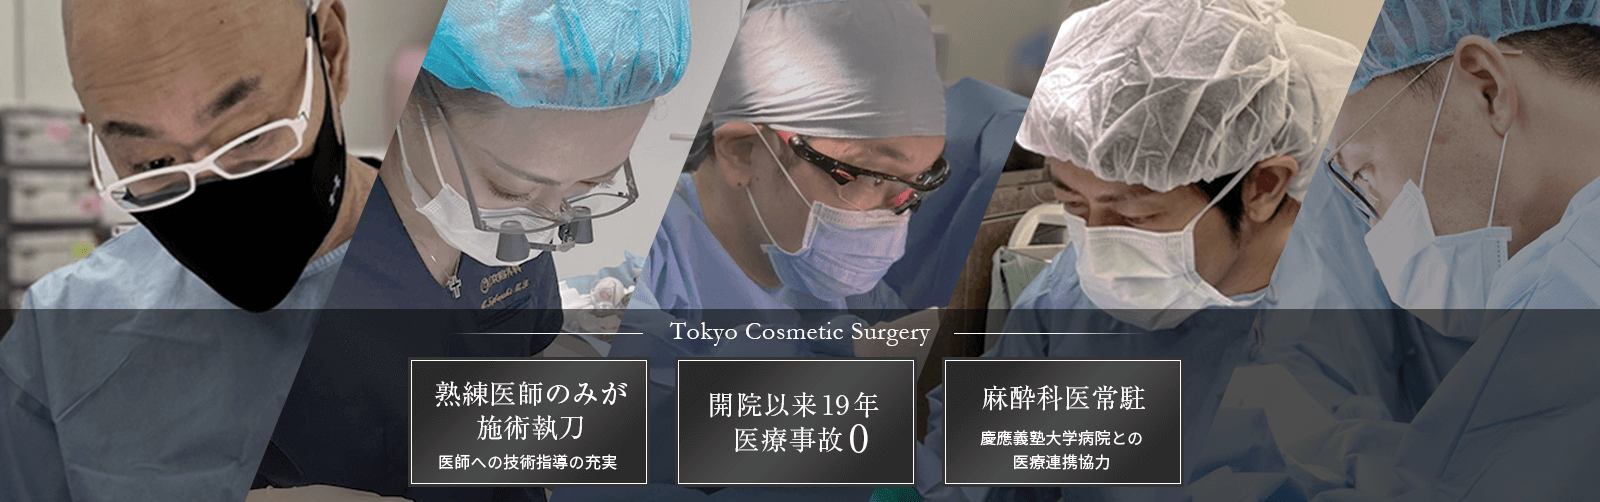 東京美容外科の写真